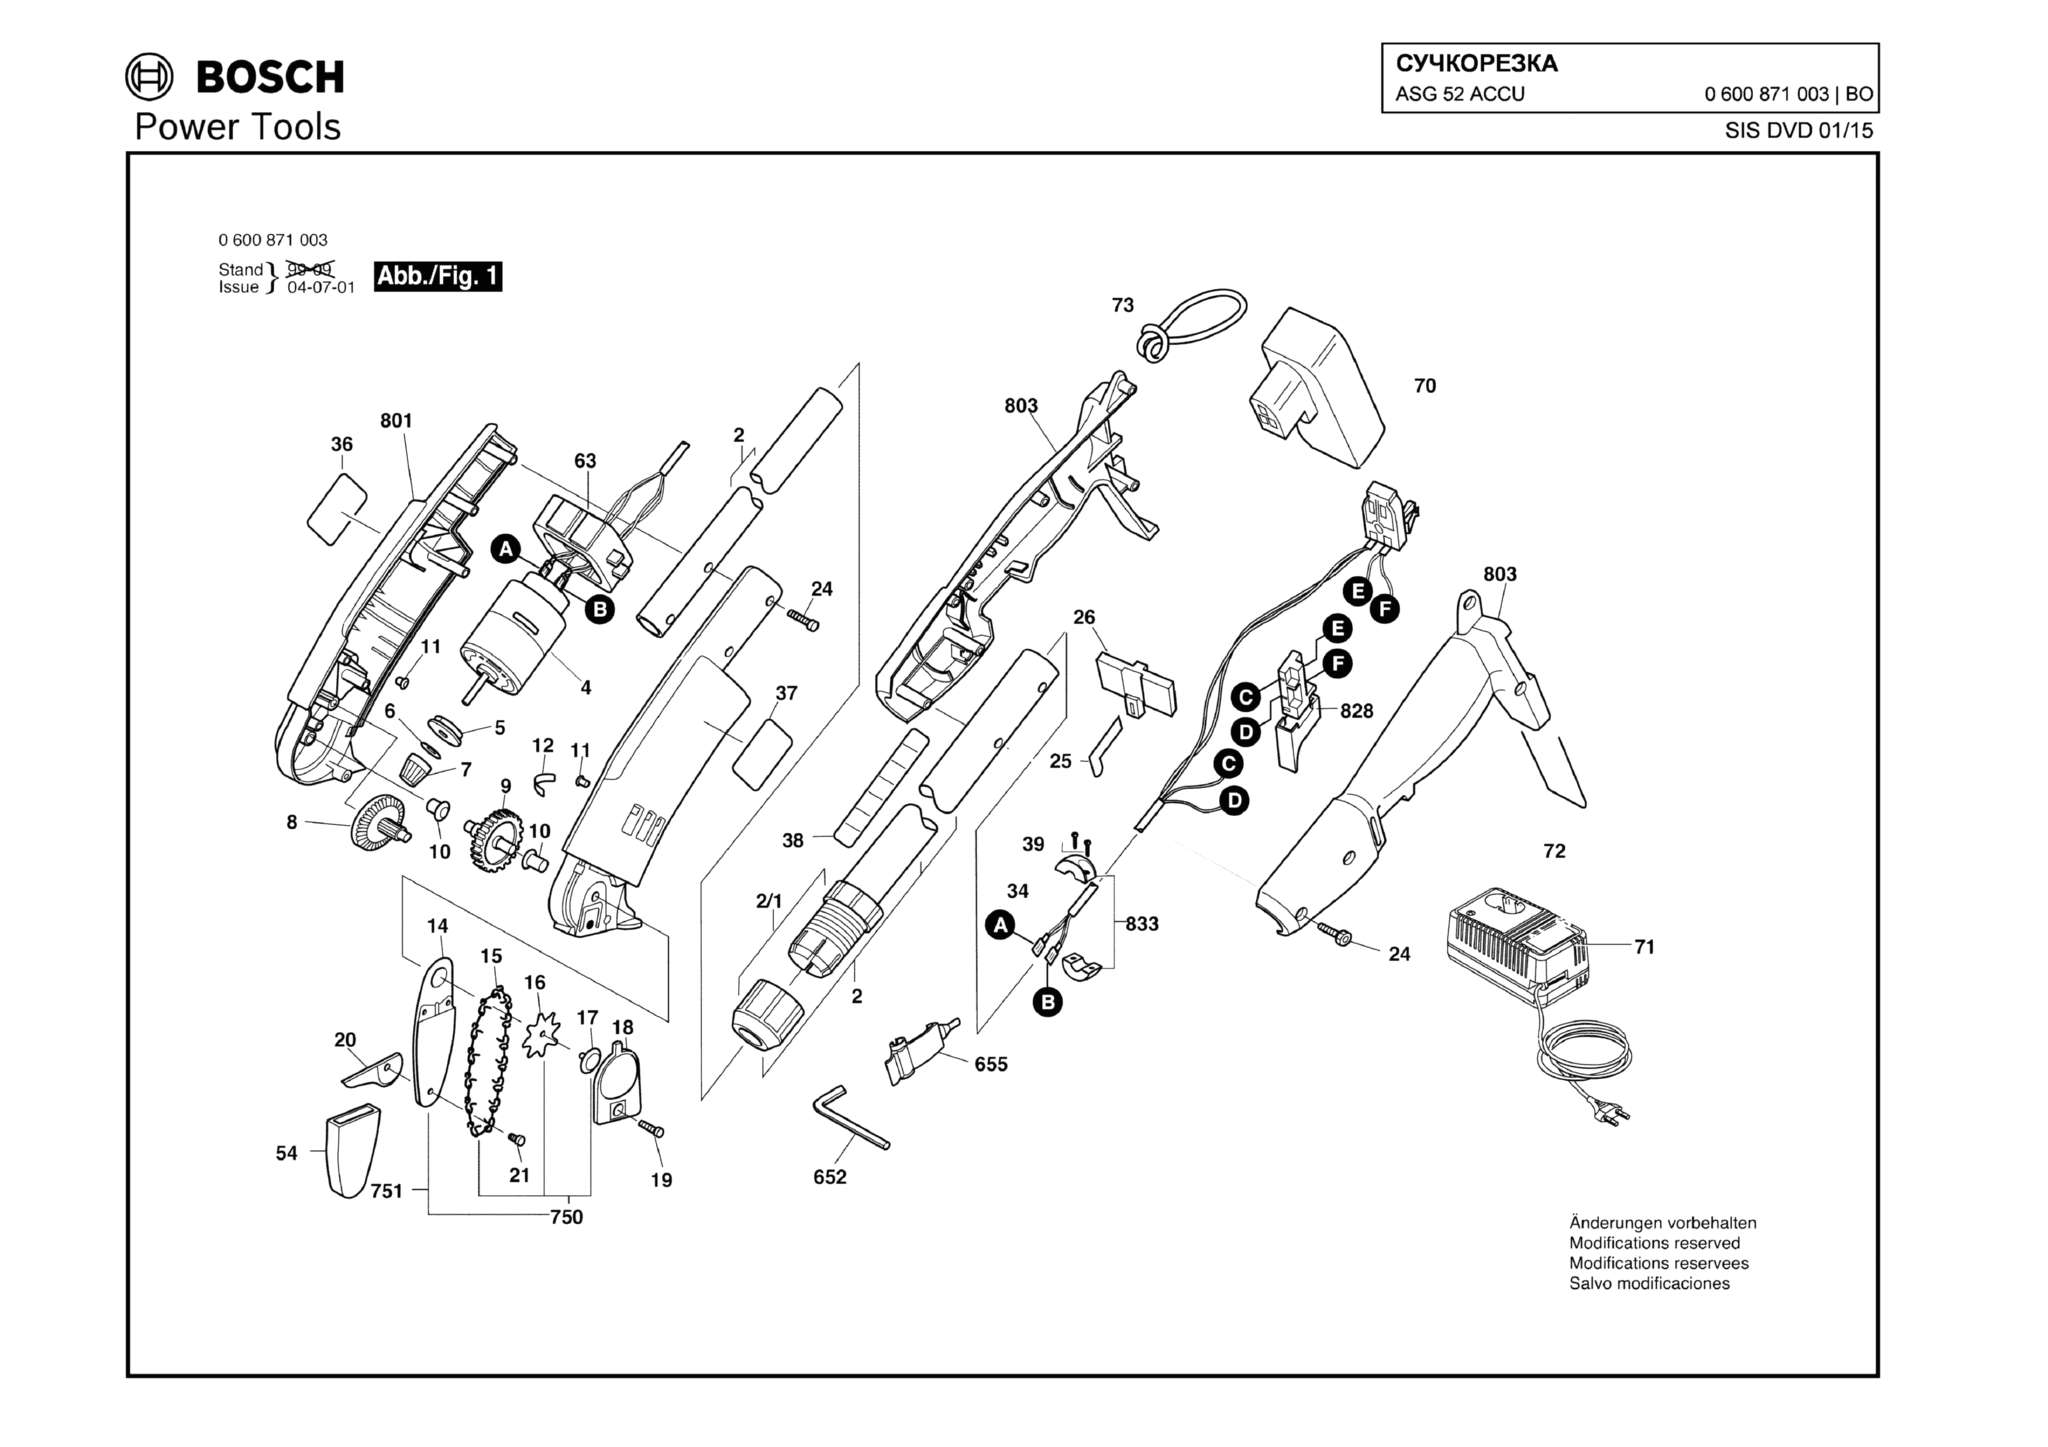 Запчасти, схема и деталировка Bosch ASG 52 ACCU (ТИП 0600871003)